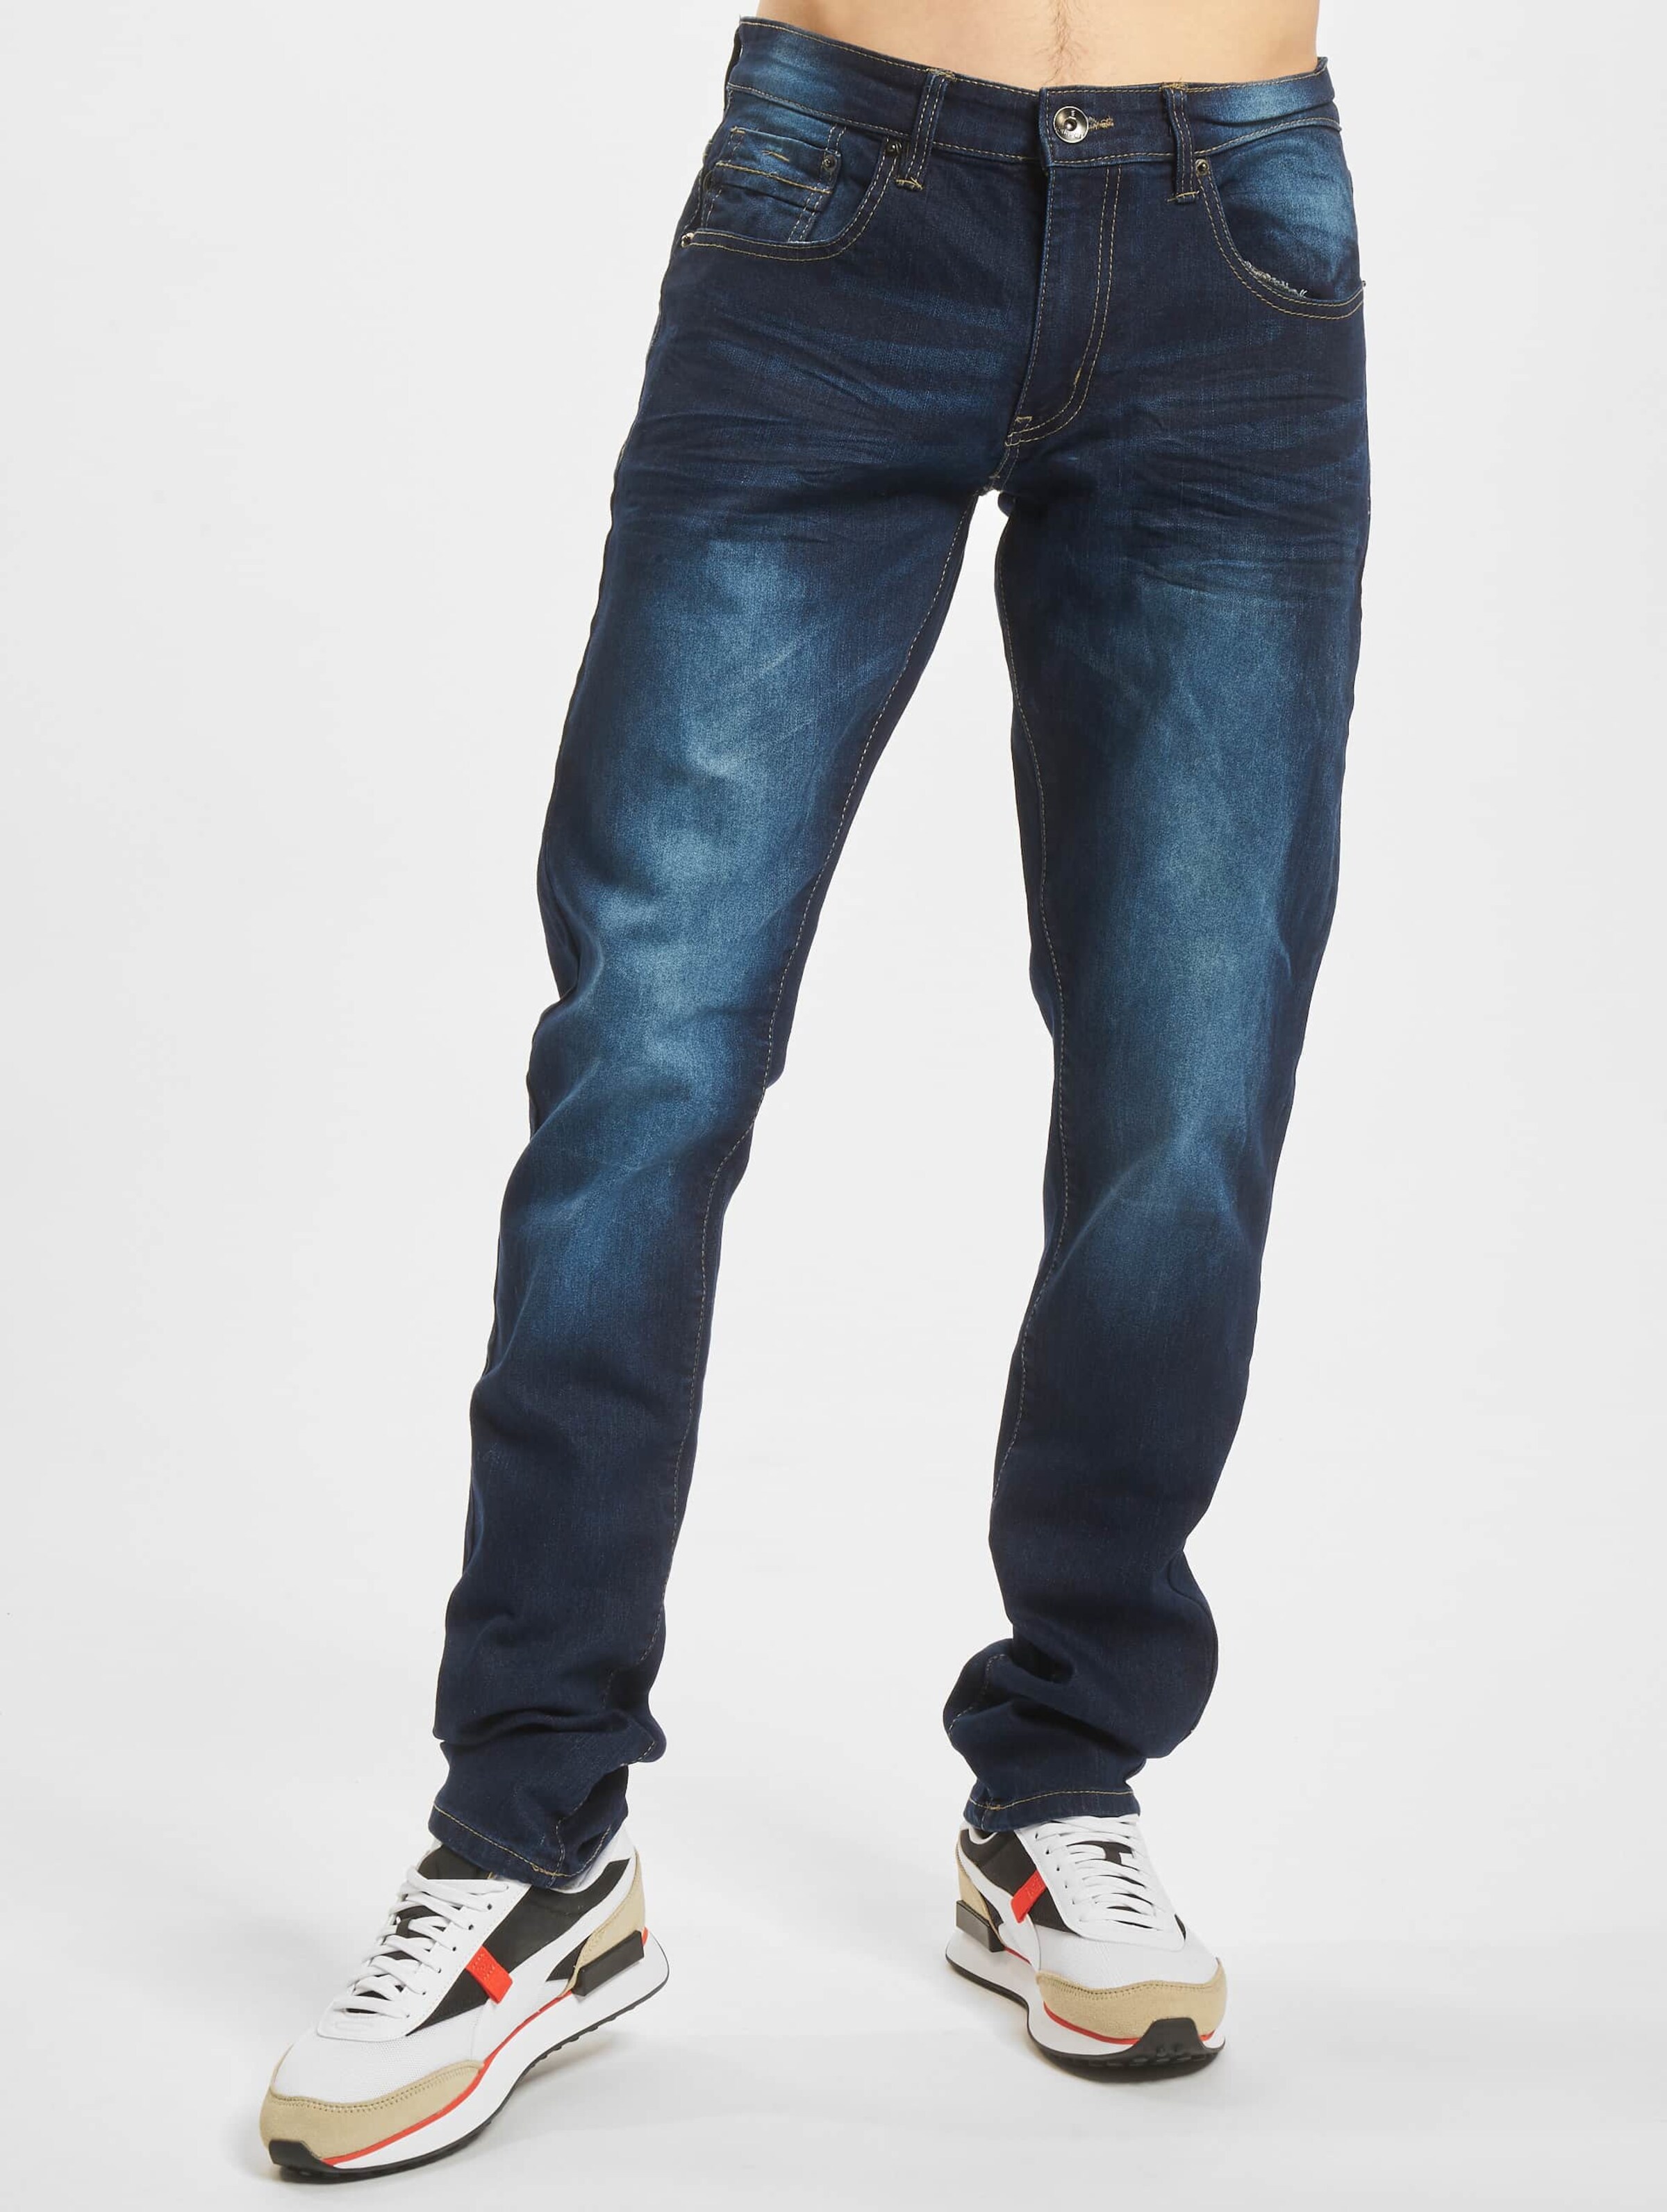 Southpole Men's Stretch Biker Denim Skinny Jeans, Light Sand Blue at Amazon  Men's Clothing store